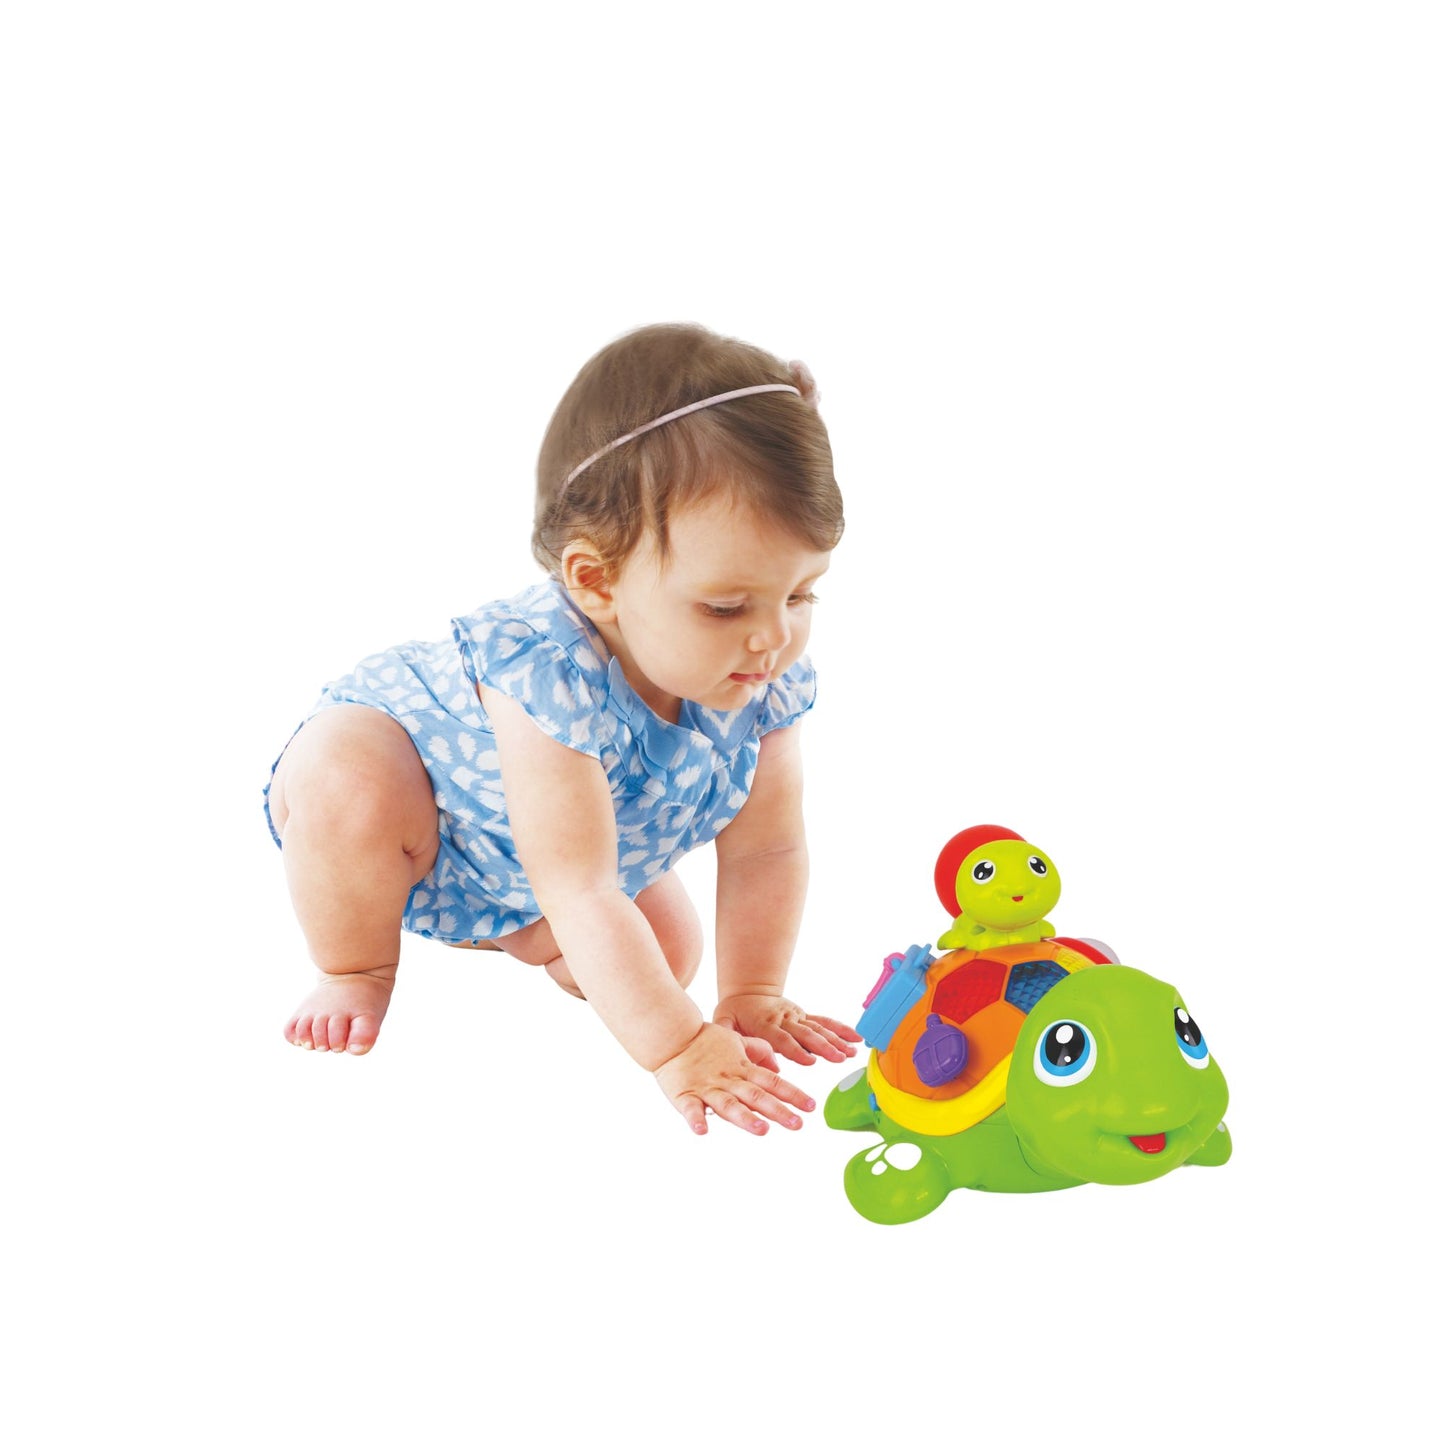 Hola Adult/Child Interactive Turtle